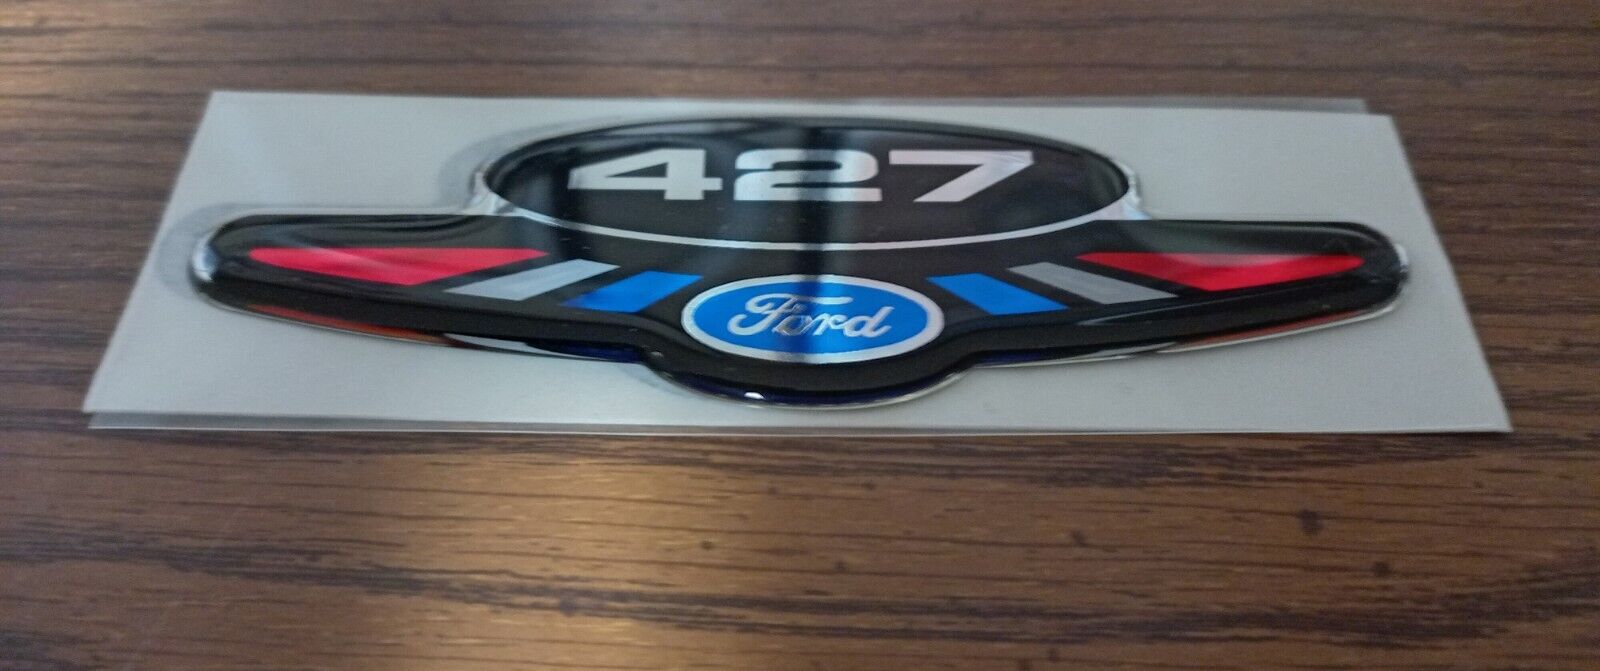 Ford 427 V8 3D Stick On Emblem SOHC Mustang New